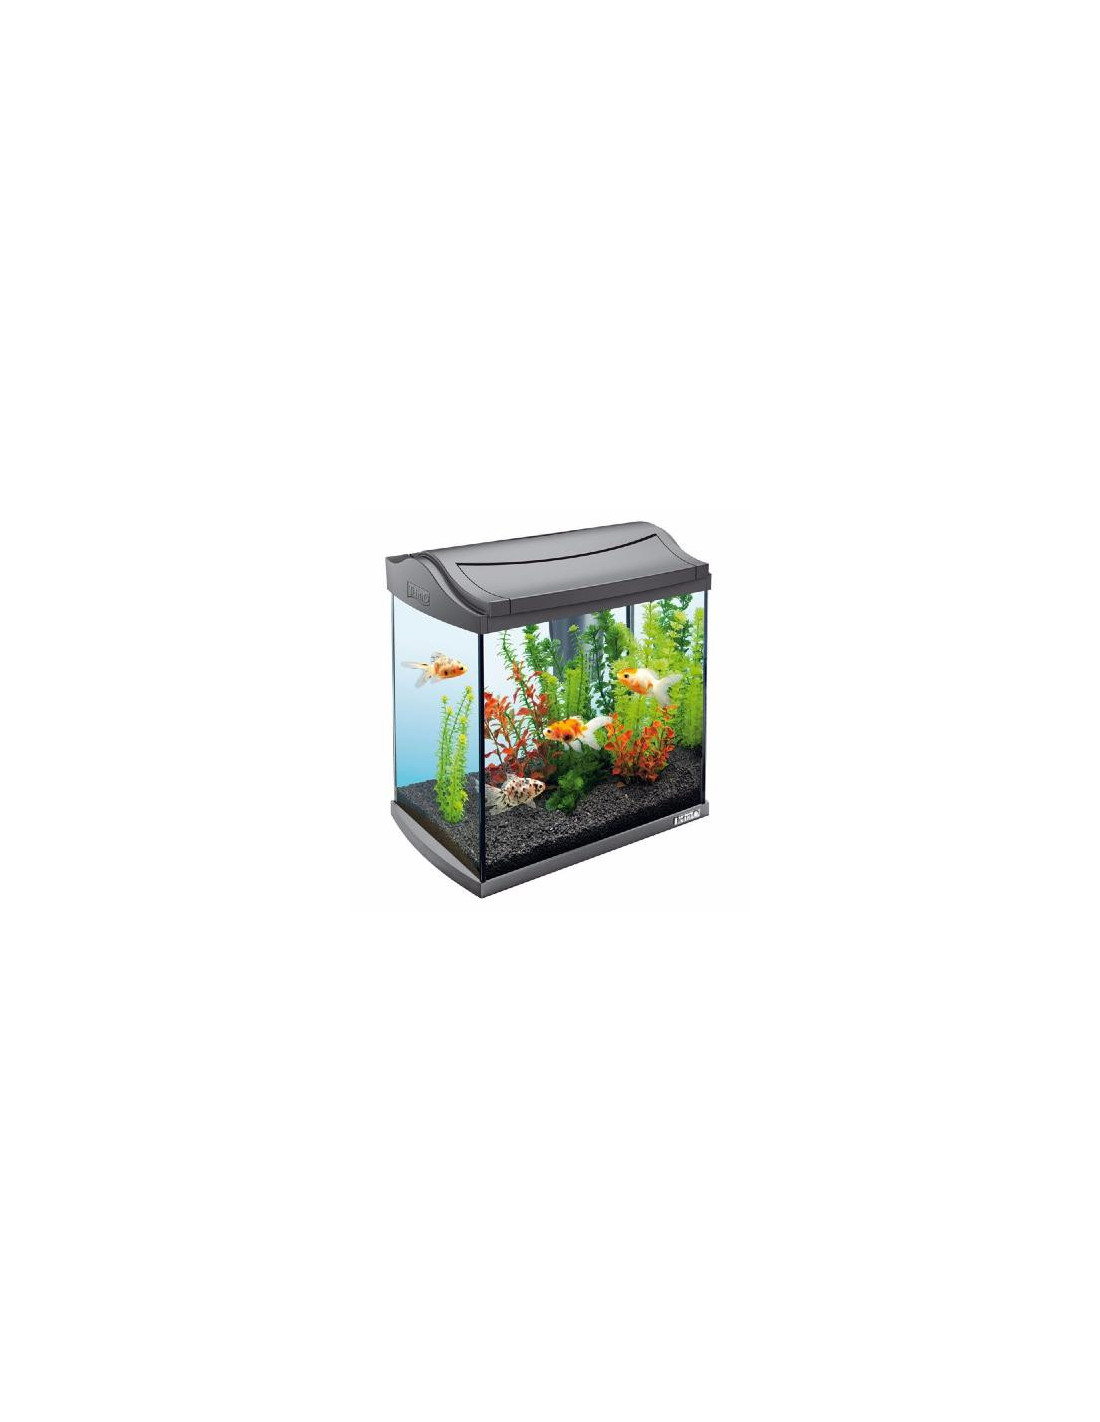 Aquarium complet 20L + filtration + pompe à air ciel et terre - Ciel & terre